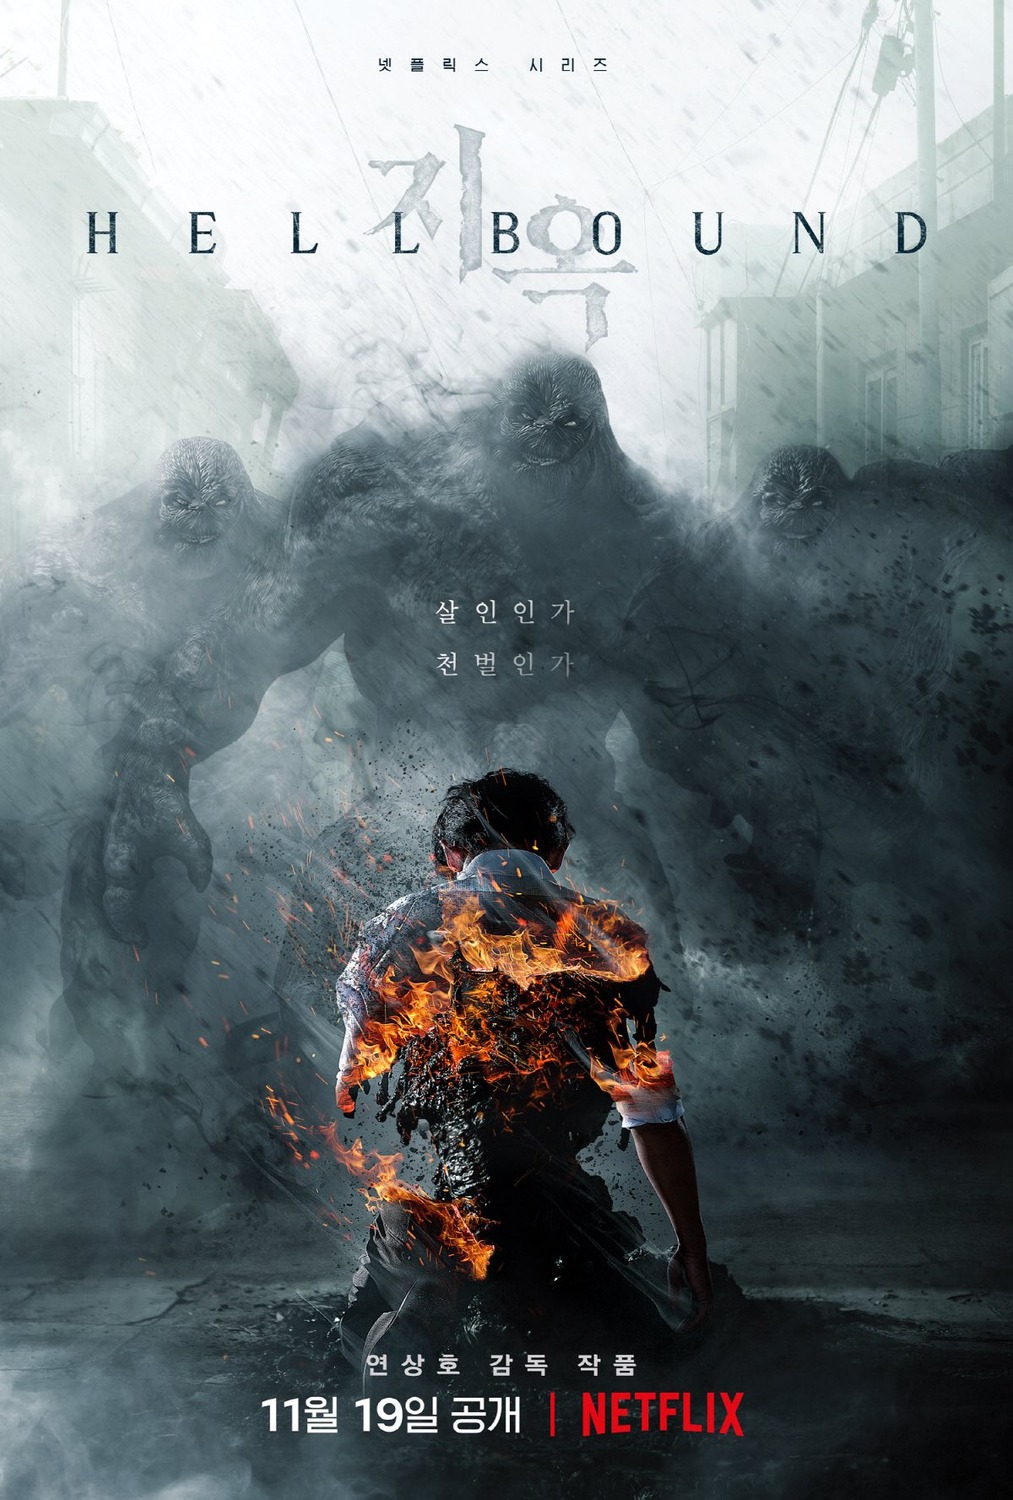 Profecia do Inferno | Série de terror coreana estreia na Netflix cartaz poster